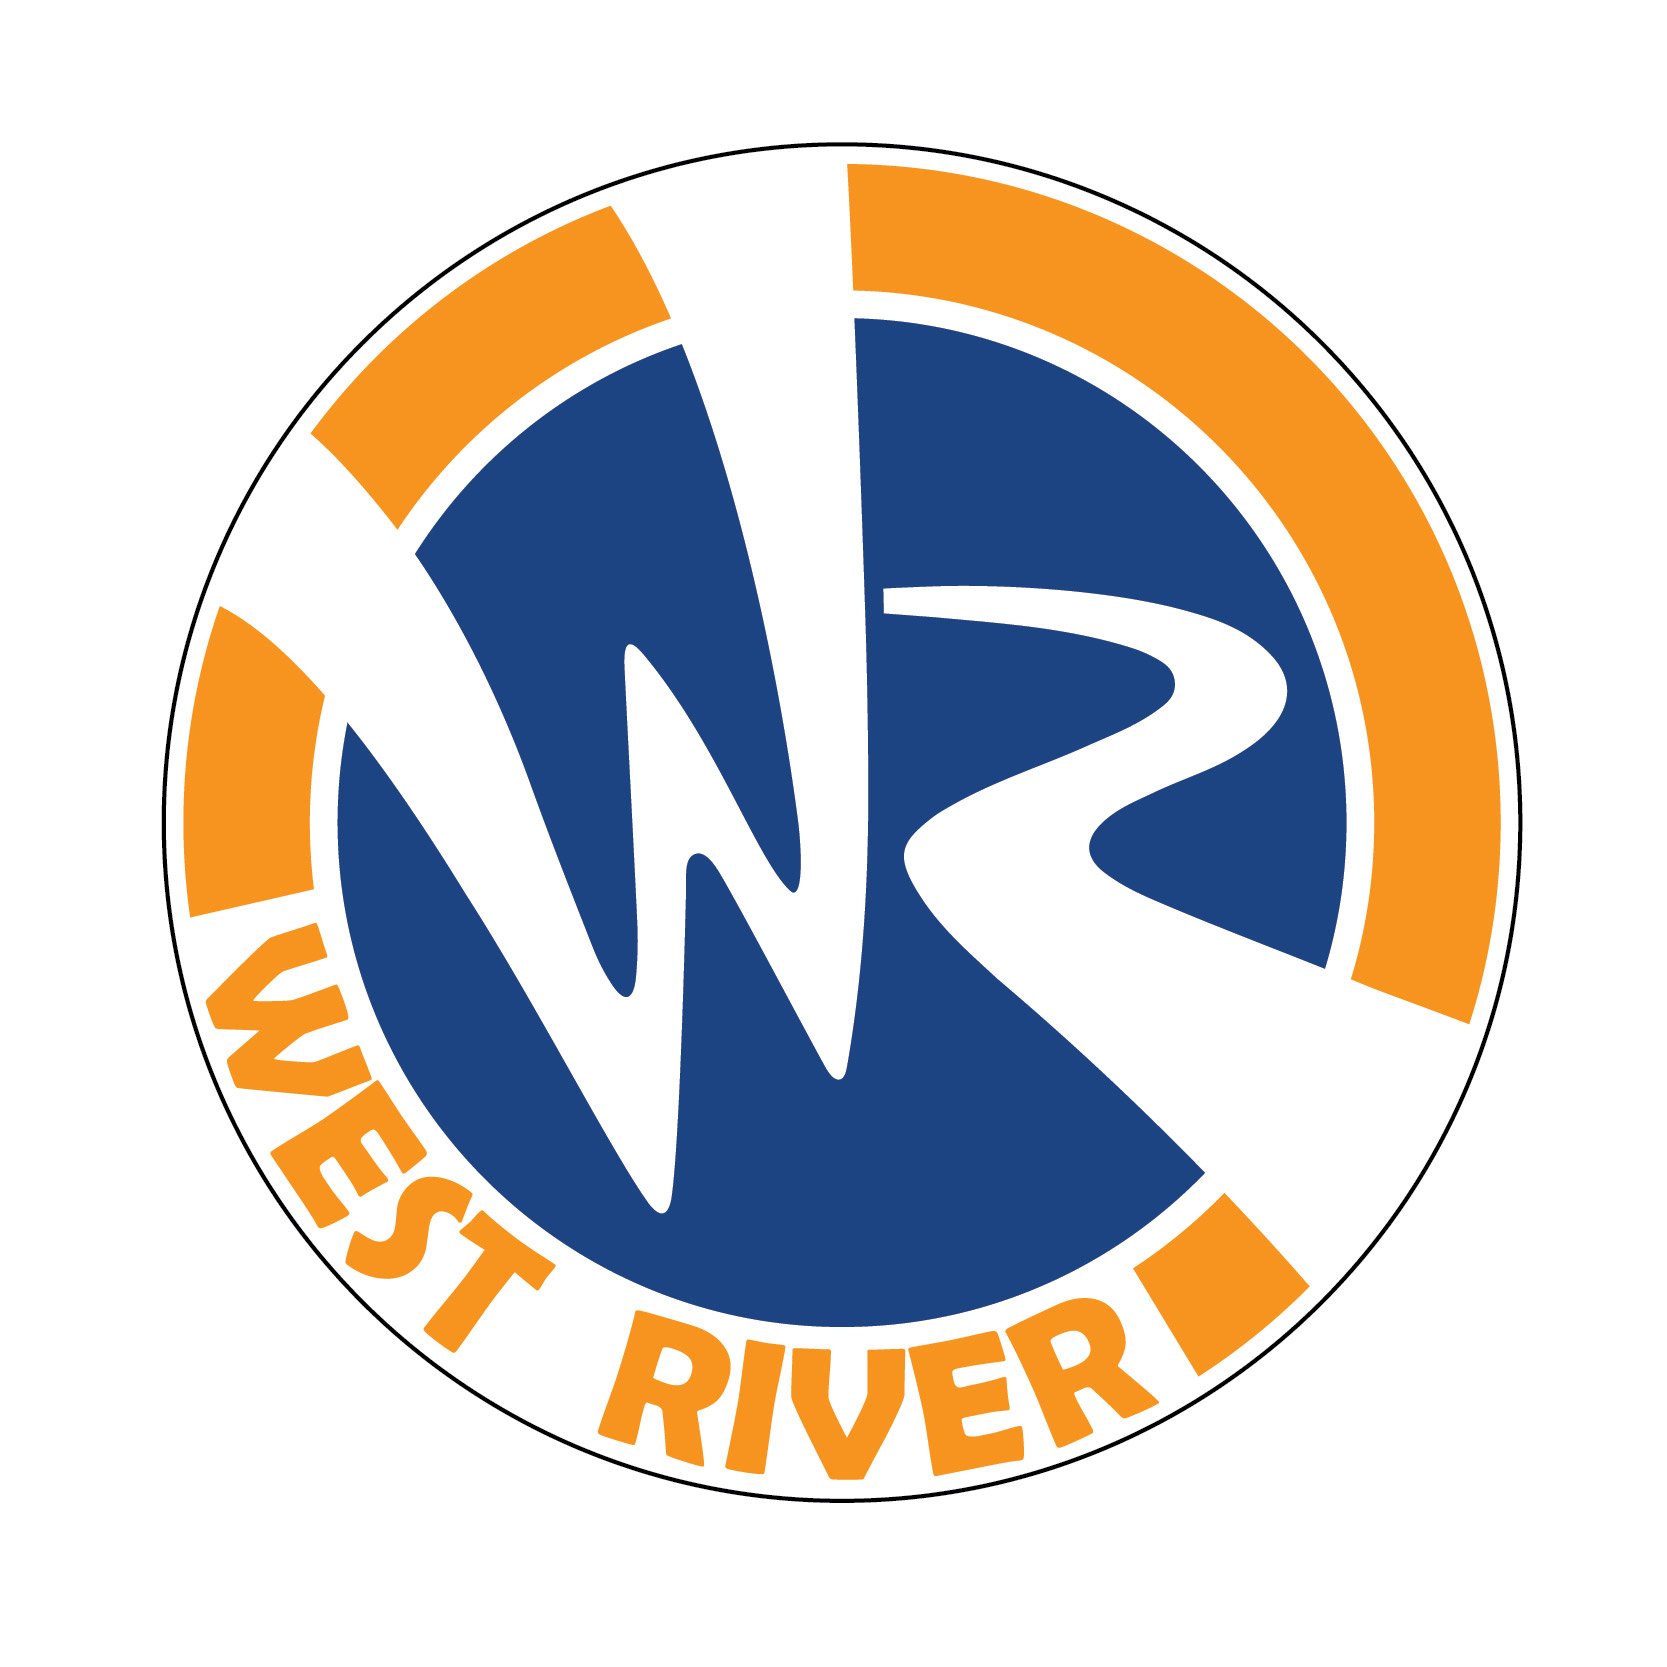 west river logo.jpg